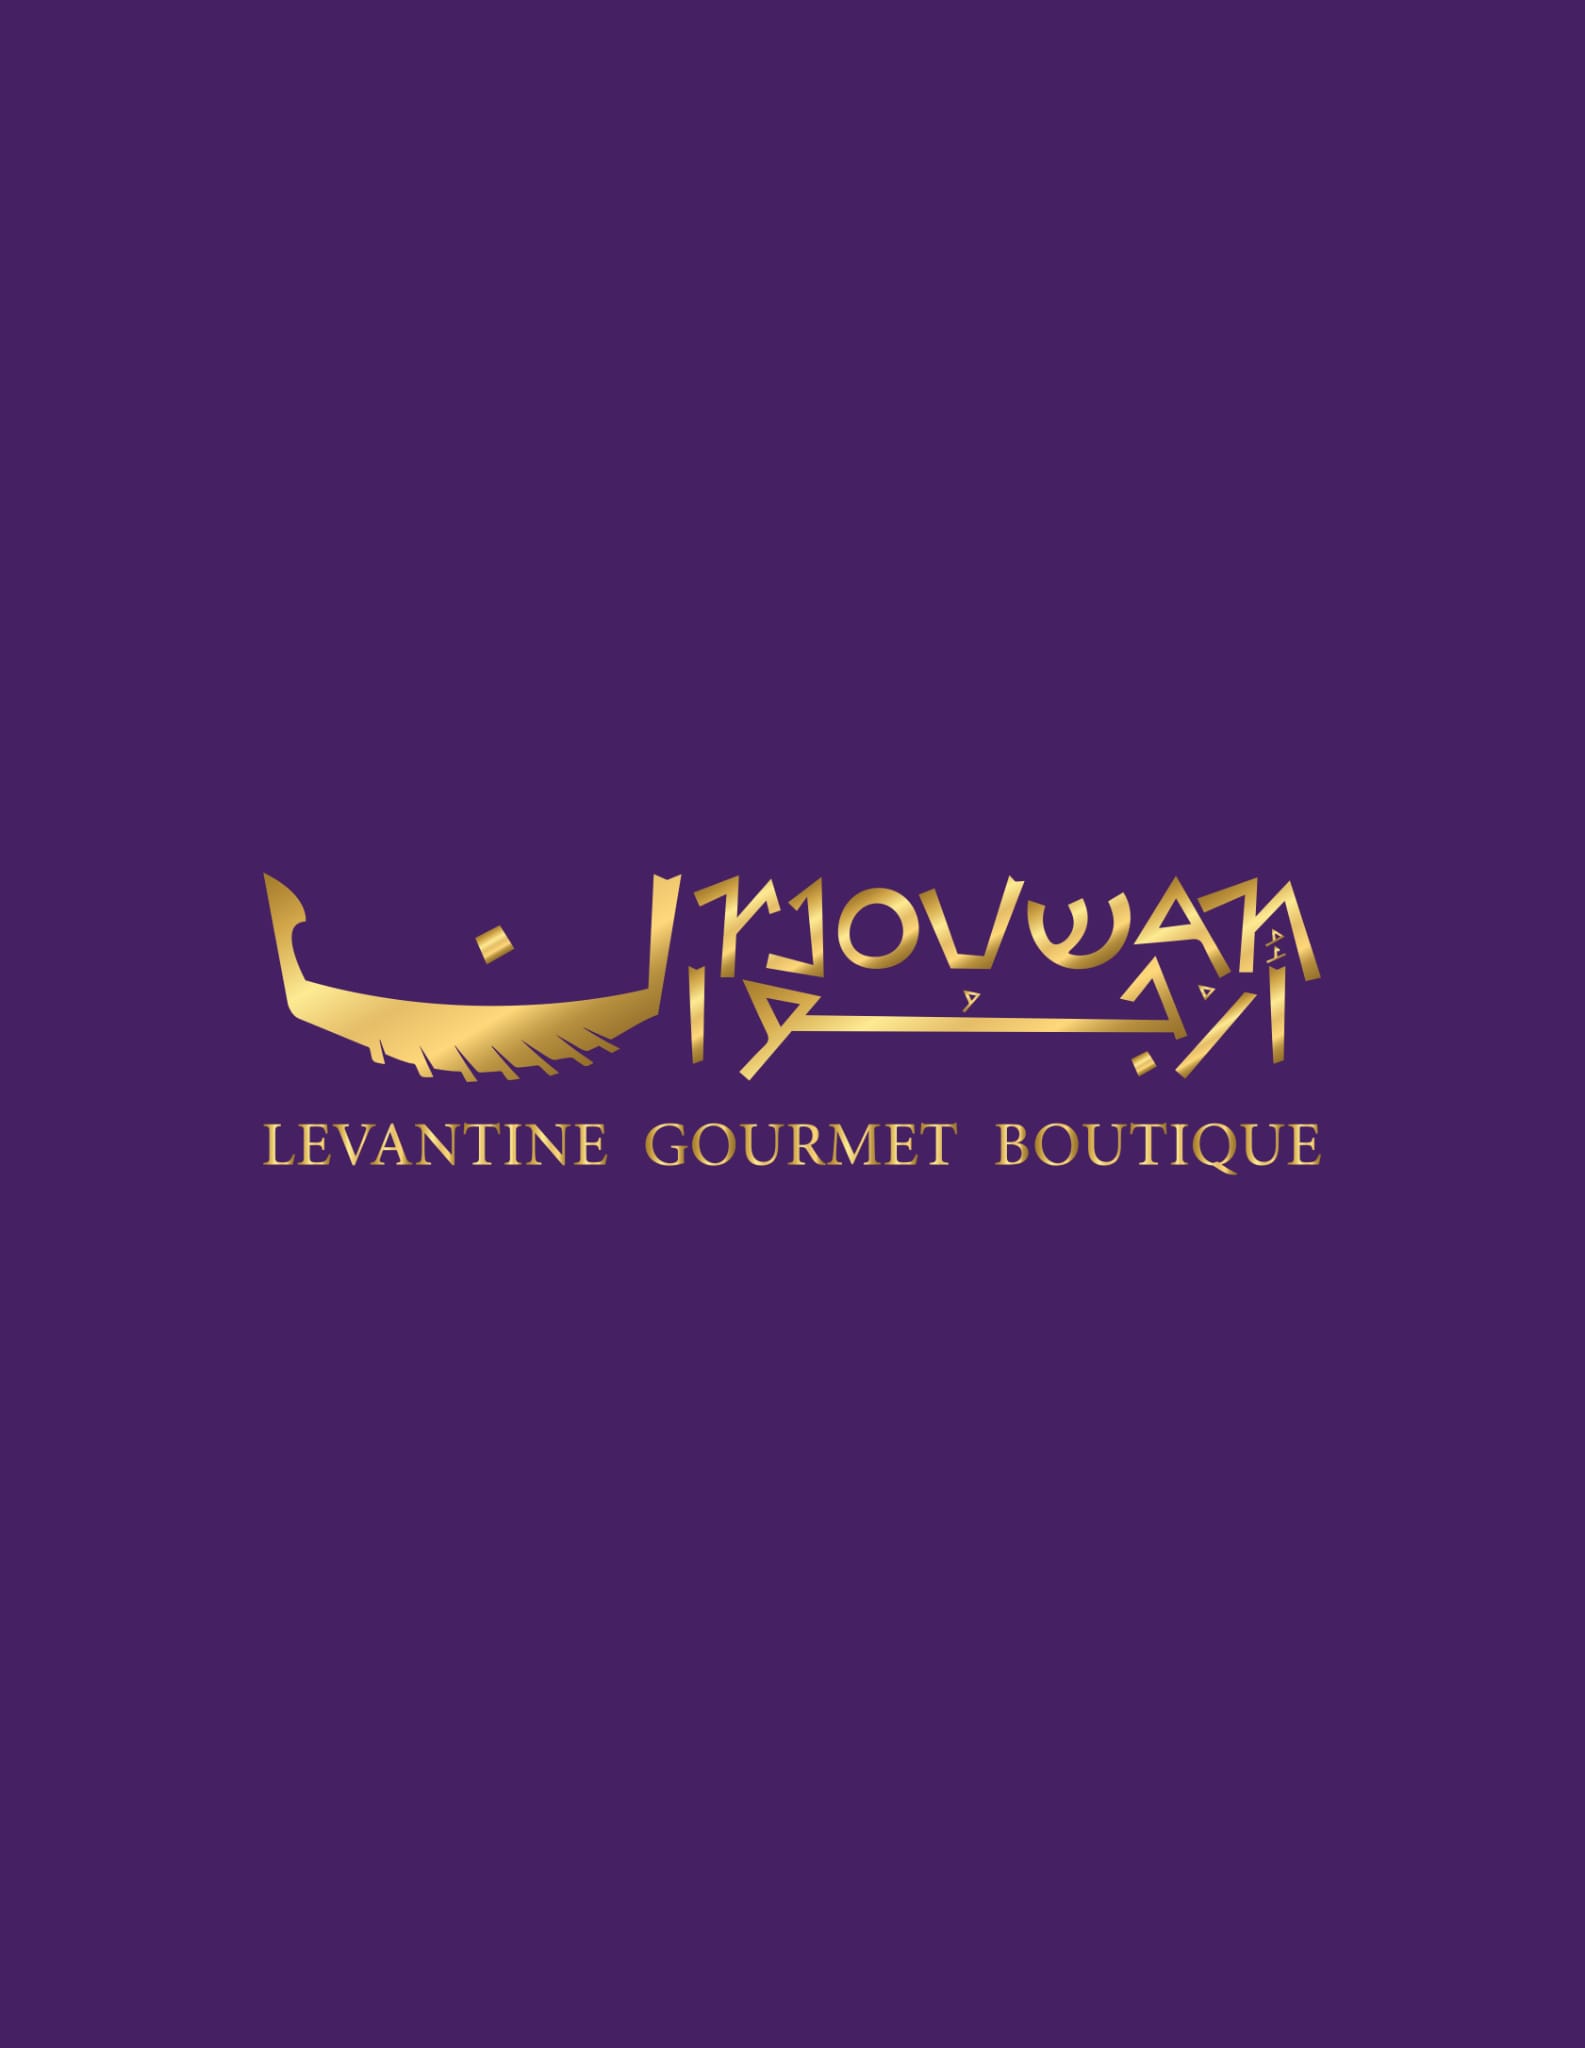 Member Introduction: Urjouwan Levantine Gourmet Boutique